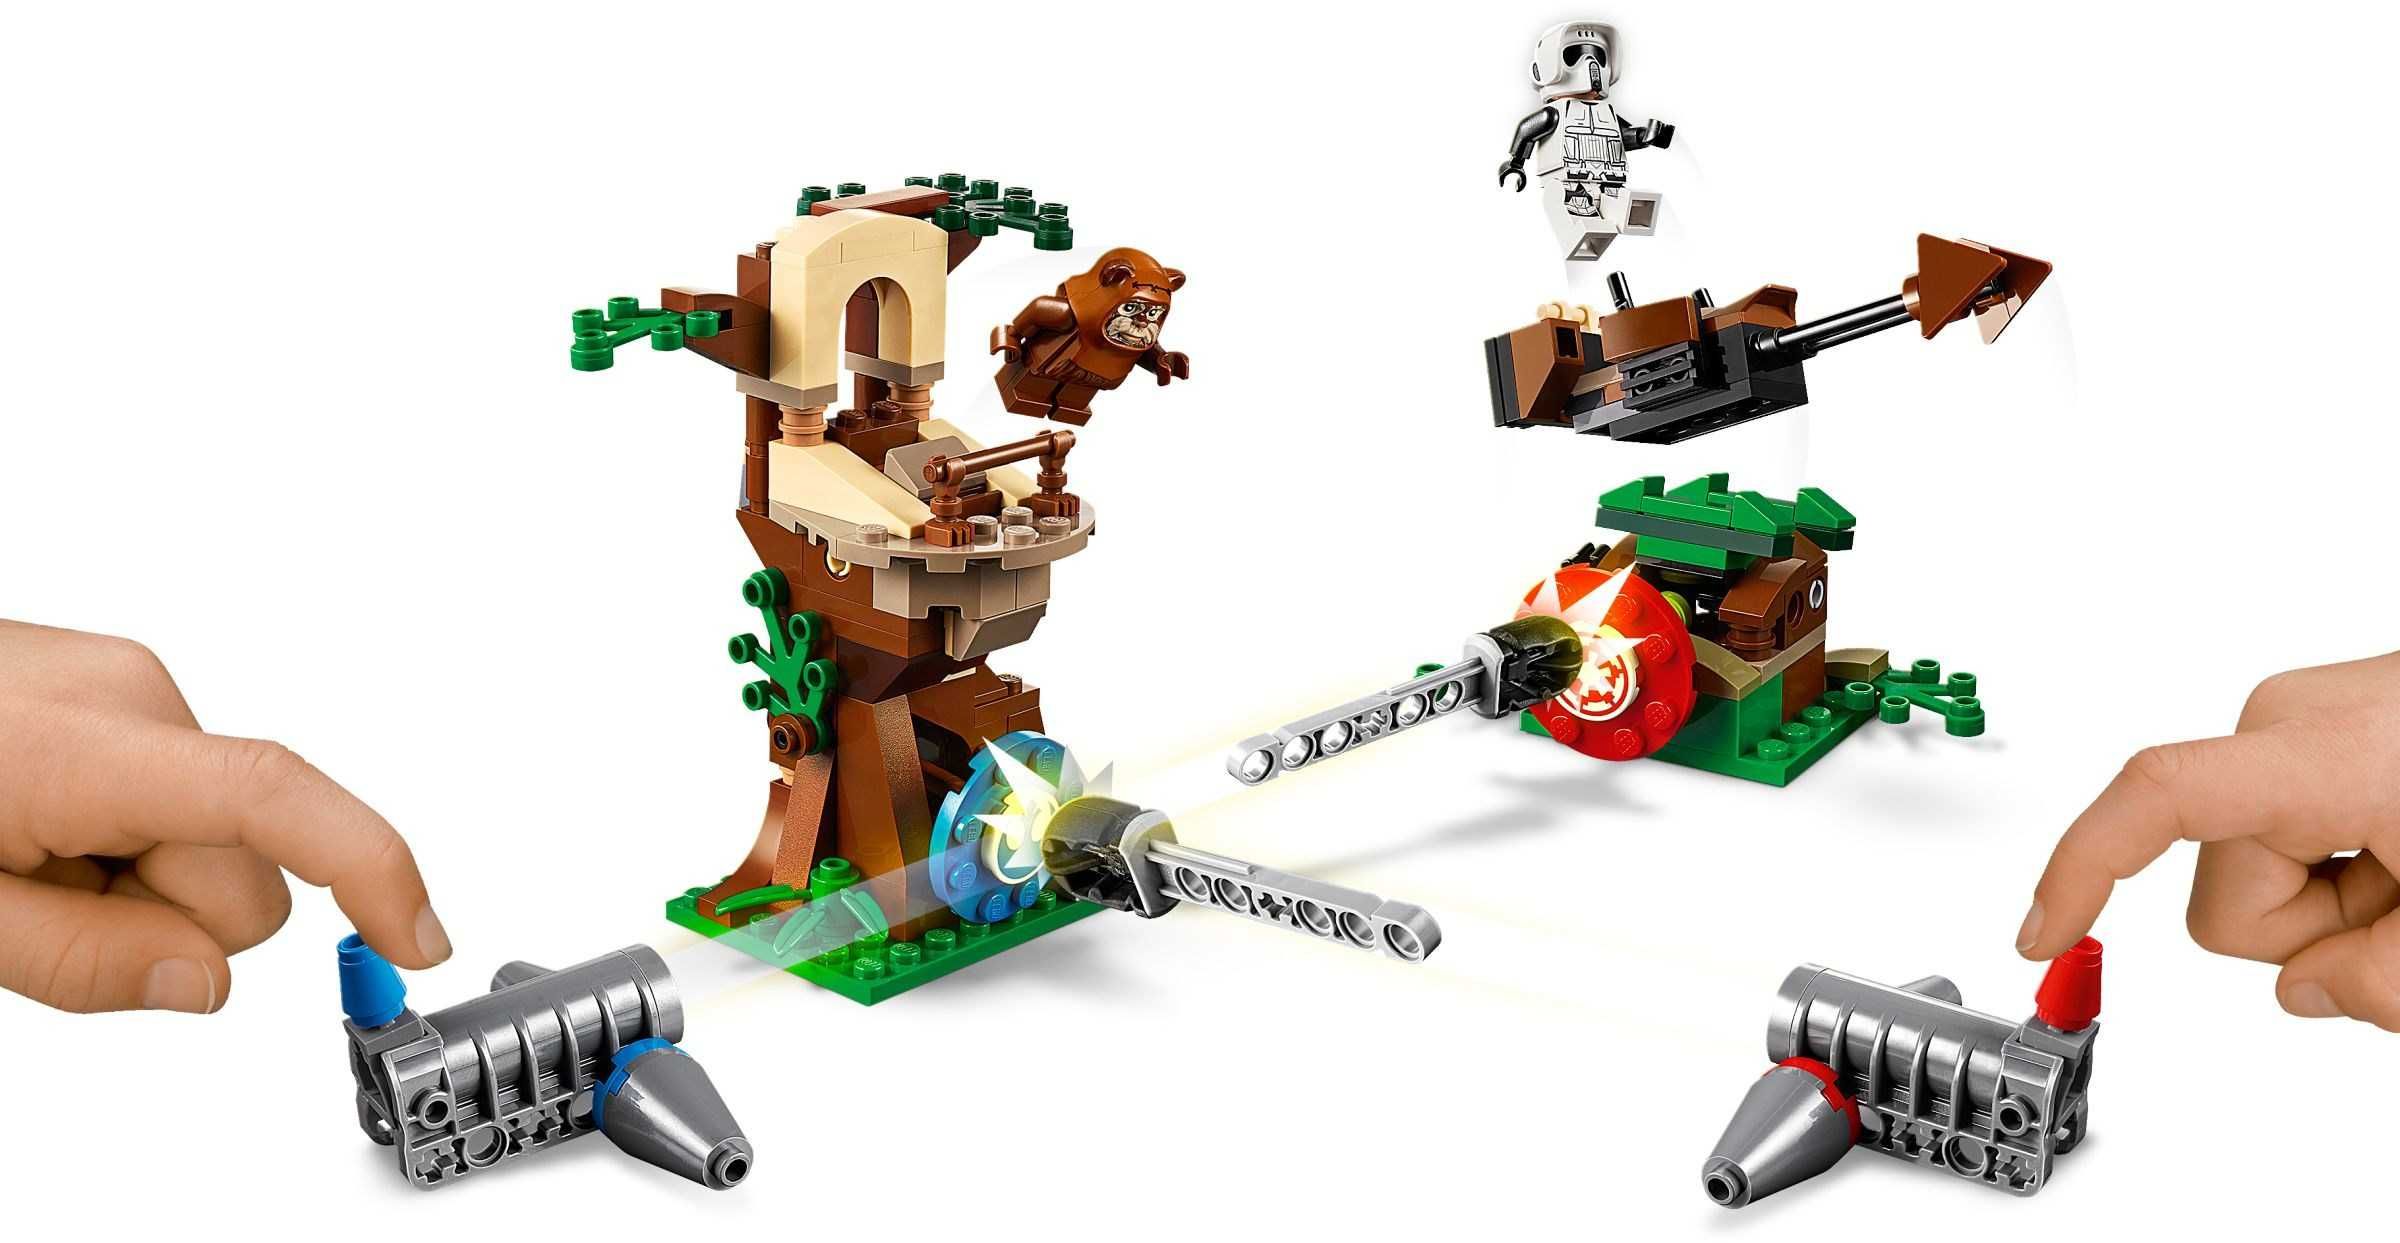 LEGO Star Wars 75238 - Asaltul Endor - Ewok vs Scout -NOU